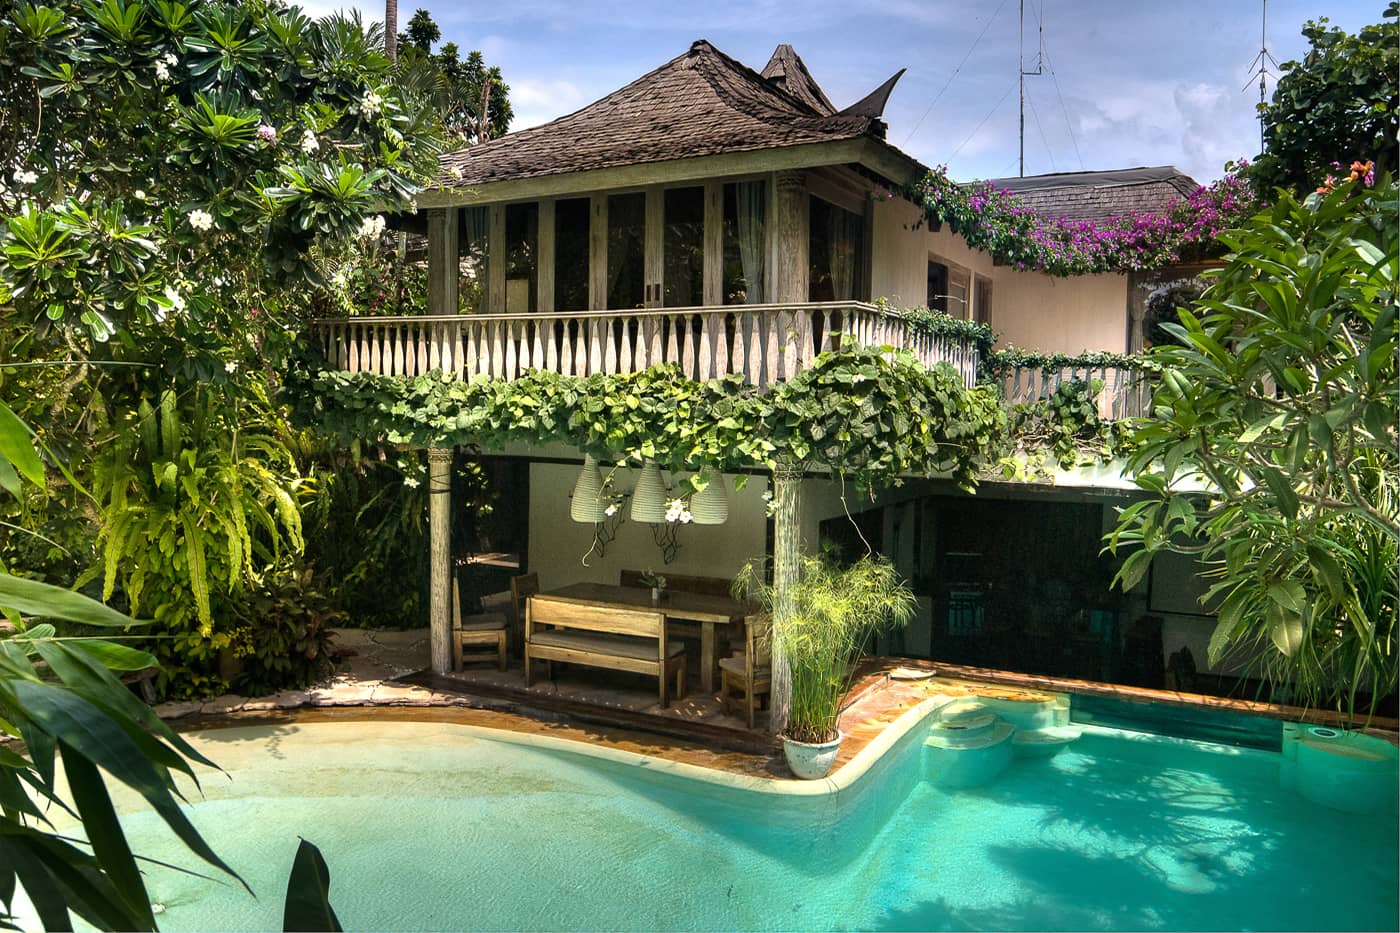 Villa Istimewa photos in Seminyak Bali